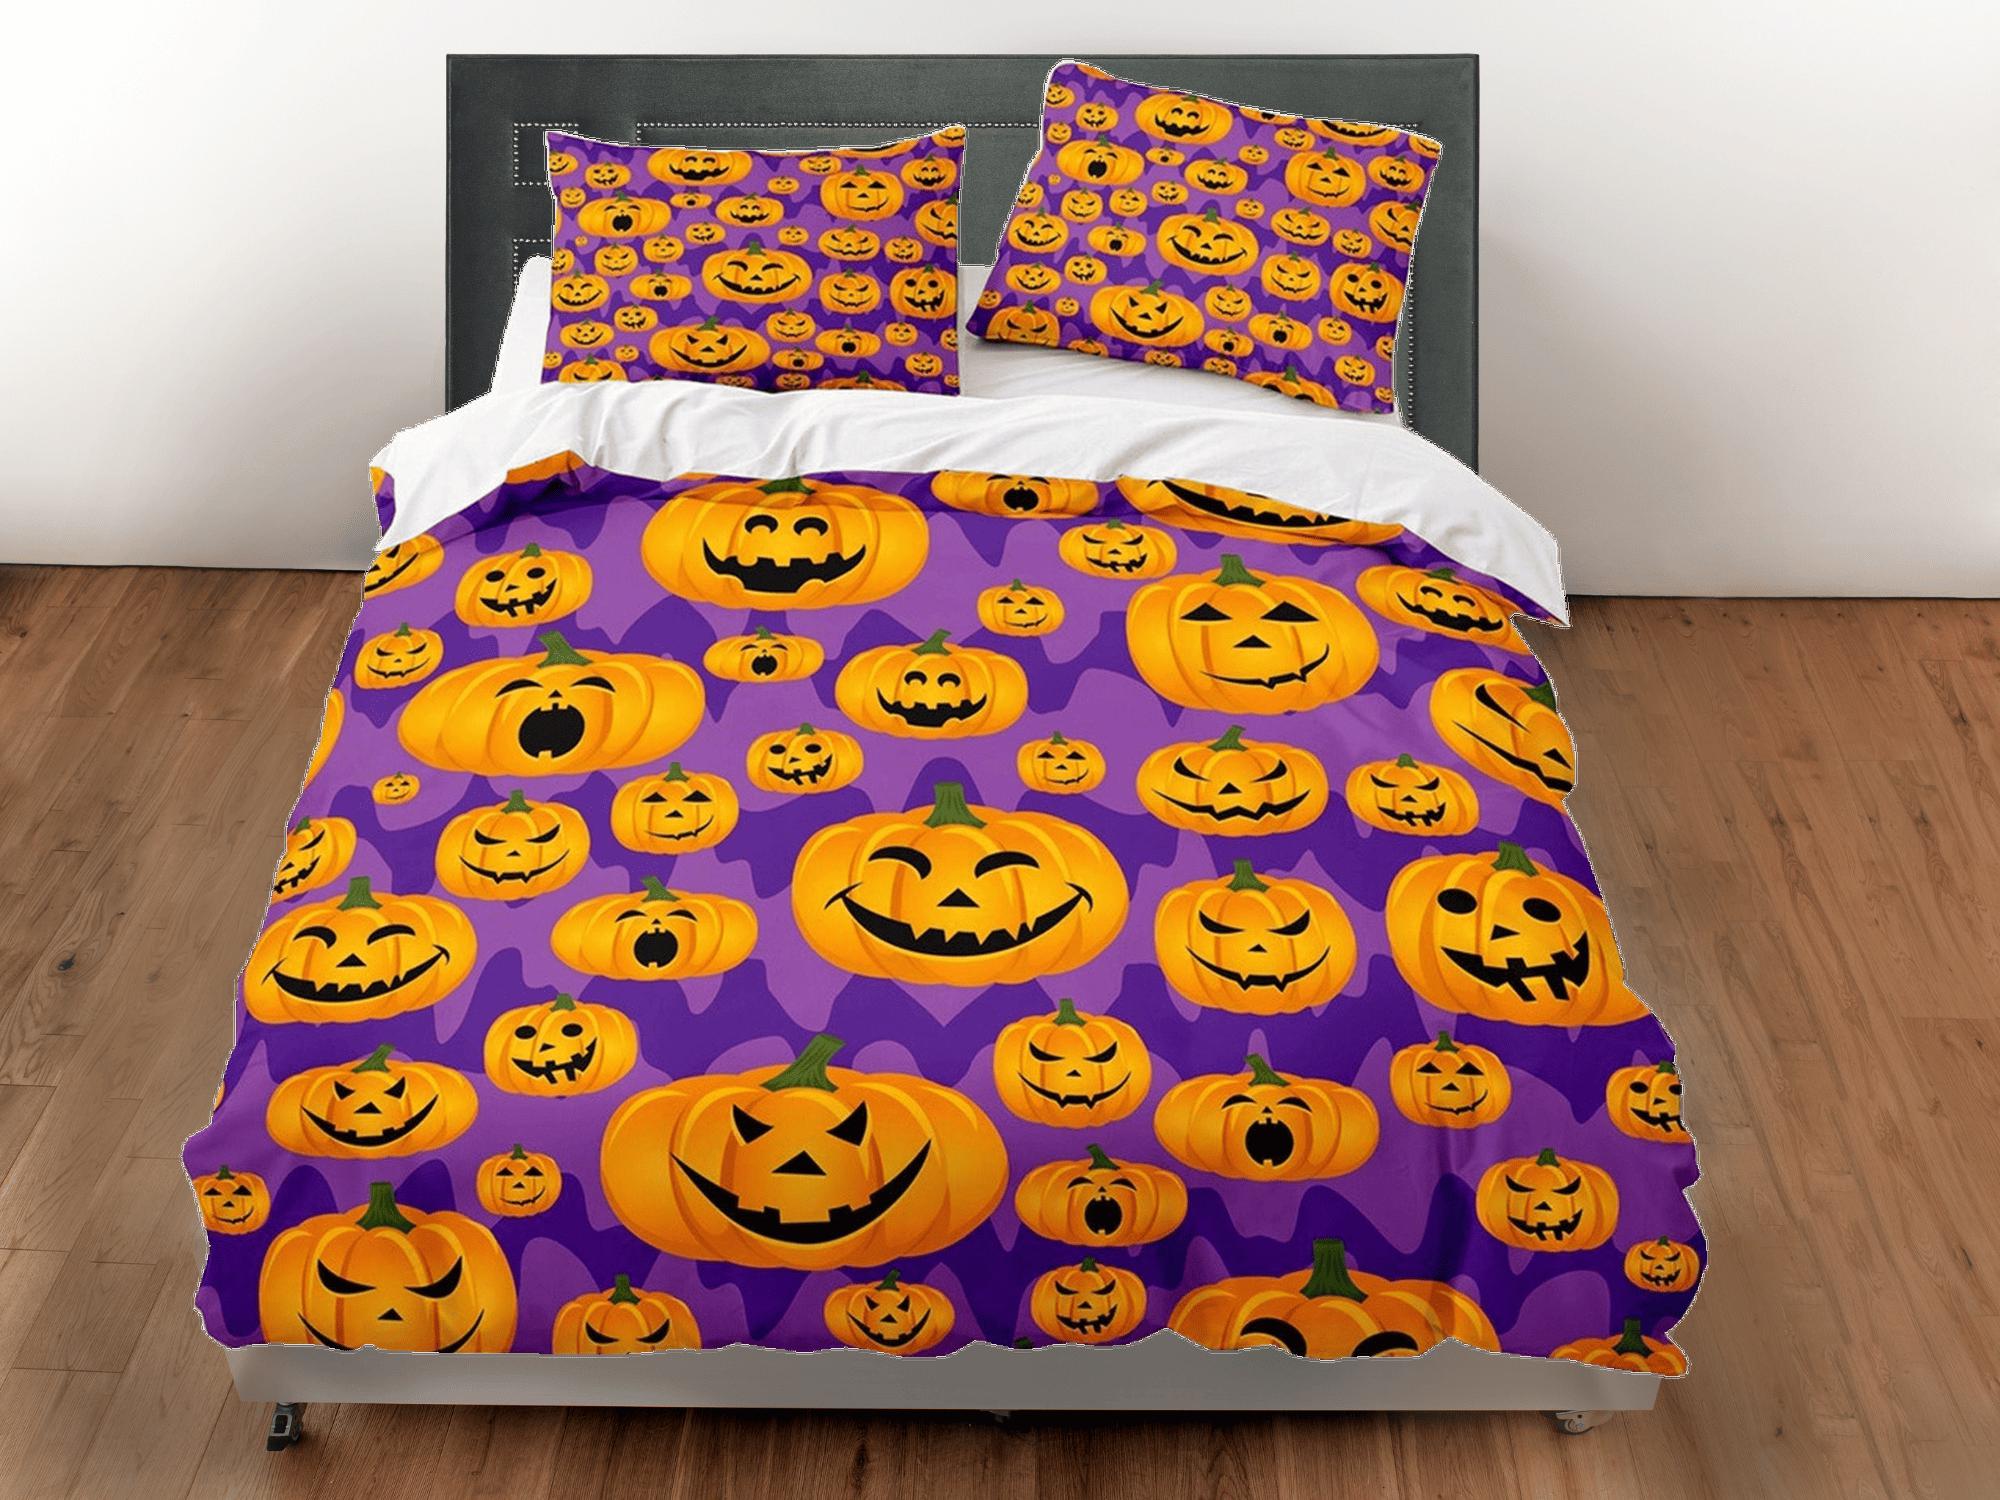 daintyduvet Happy pumpkin halloween full size bedding & pillowcase, purple duvet cover set dorm bedding, nursery toddler bedding, halloween gift